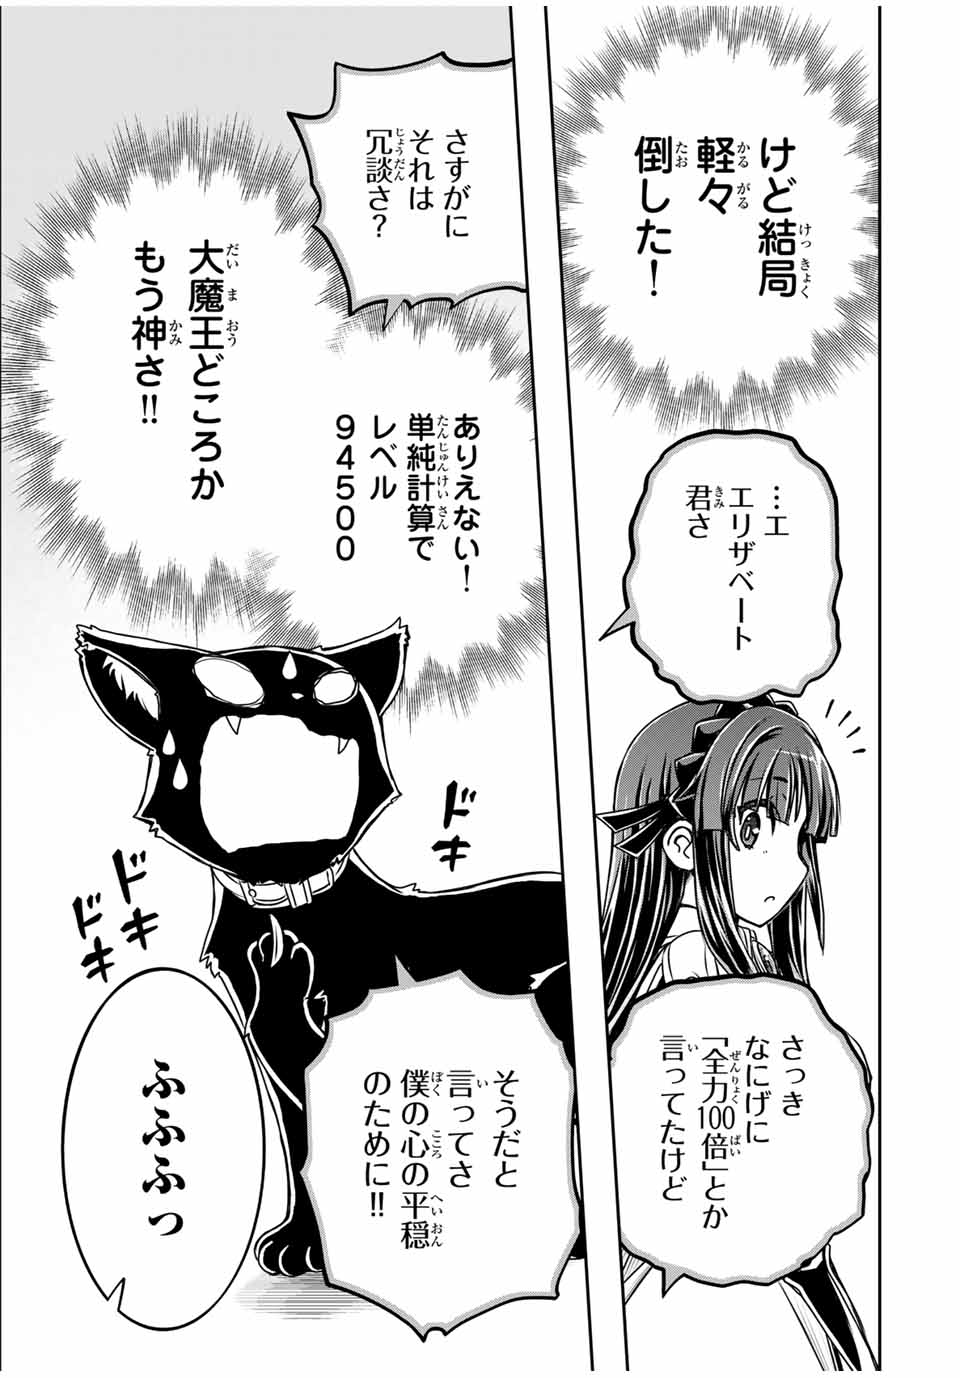 Nengan no Akuyaku Reijou (Last Boss) no Karada wo Teniiretazo!  - Chapter 27 - Page 19